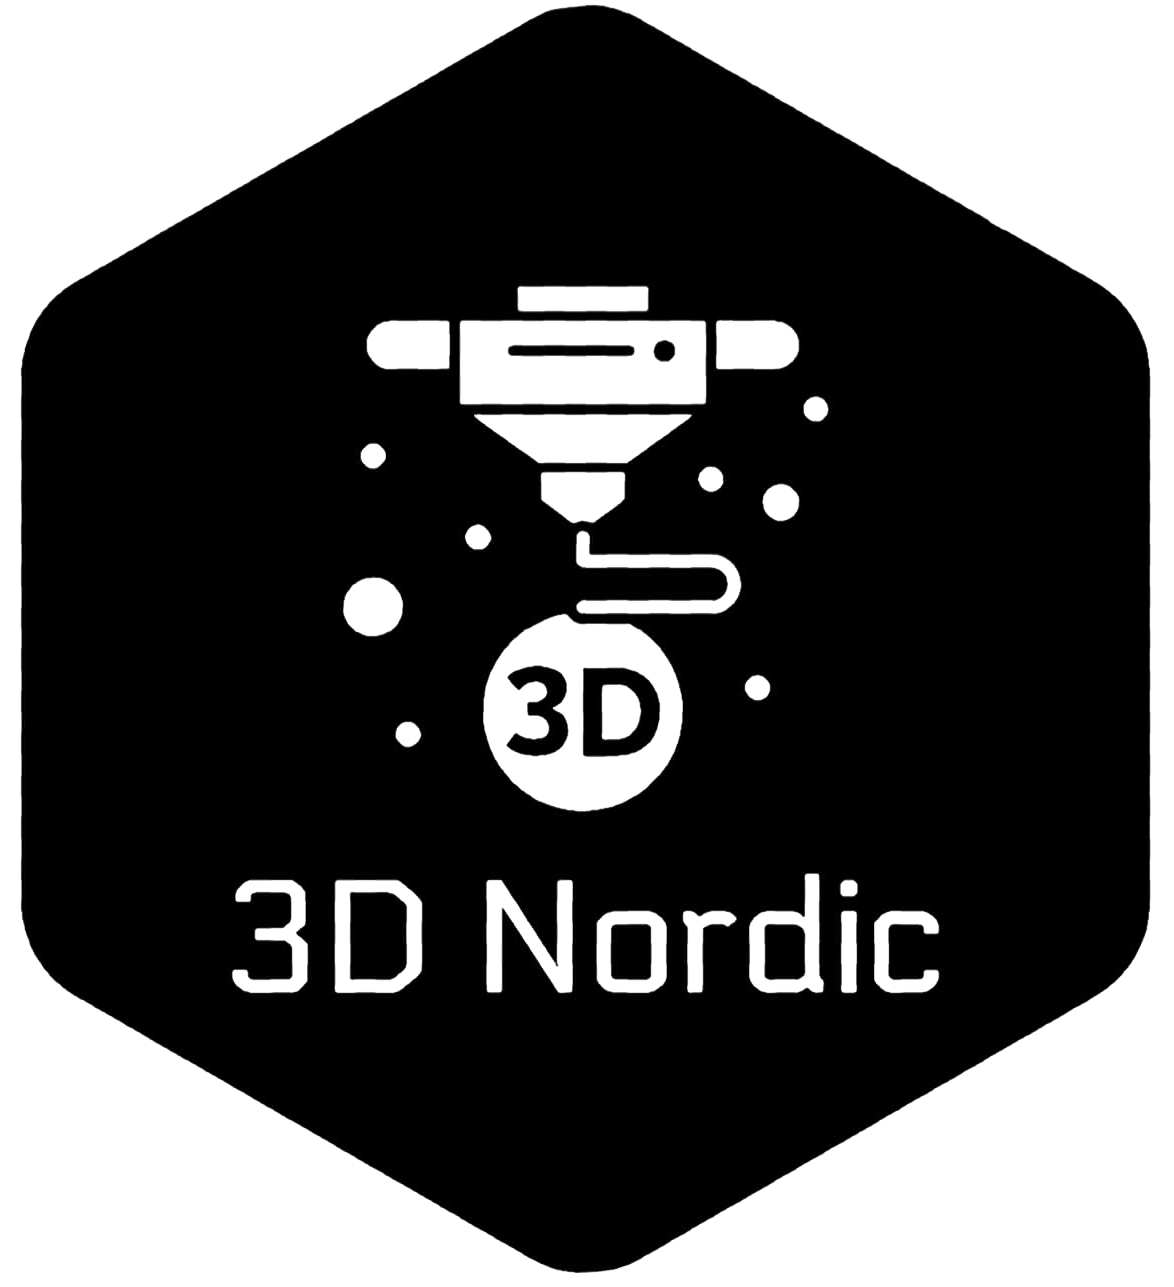 3D Nordic